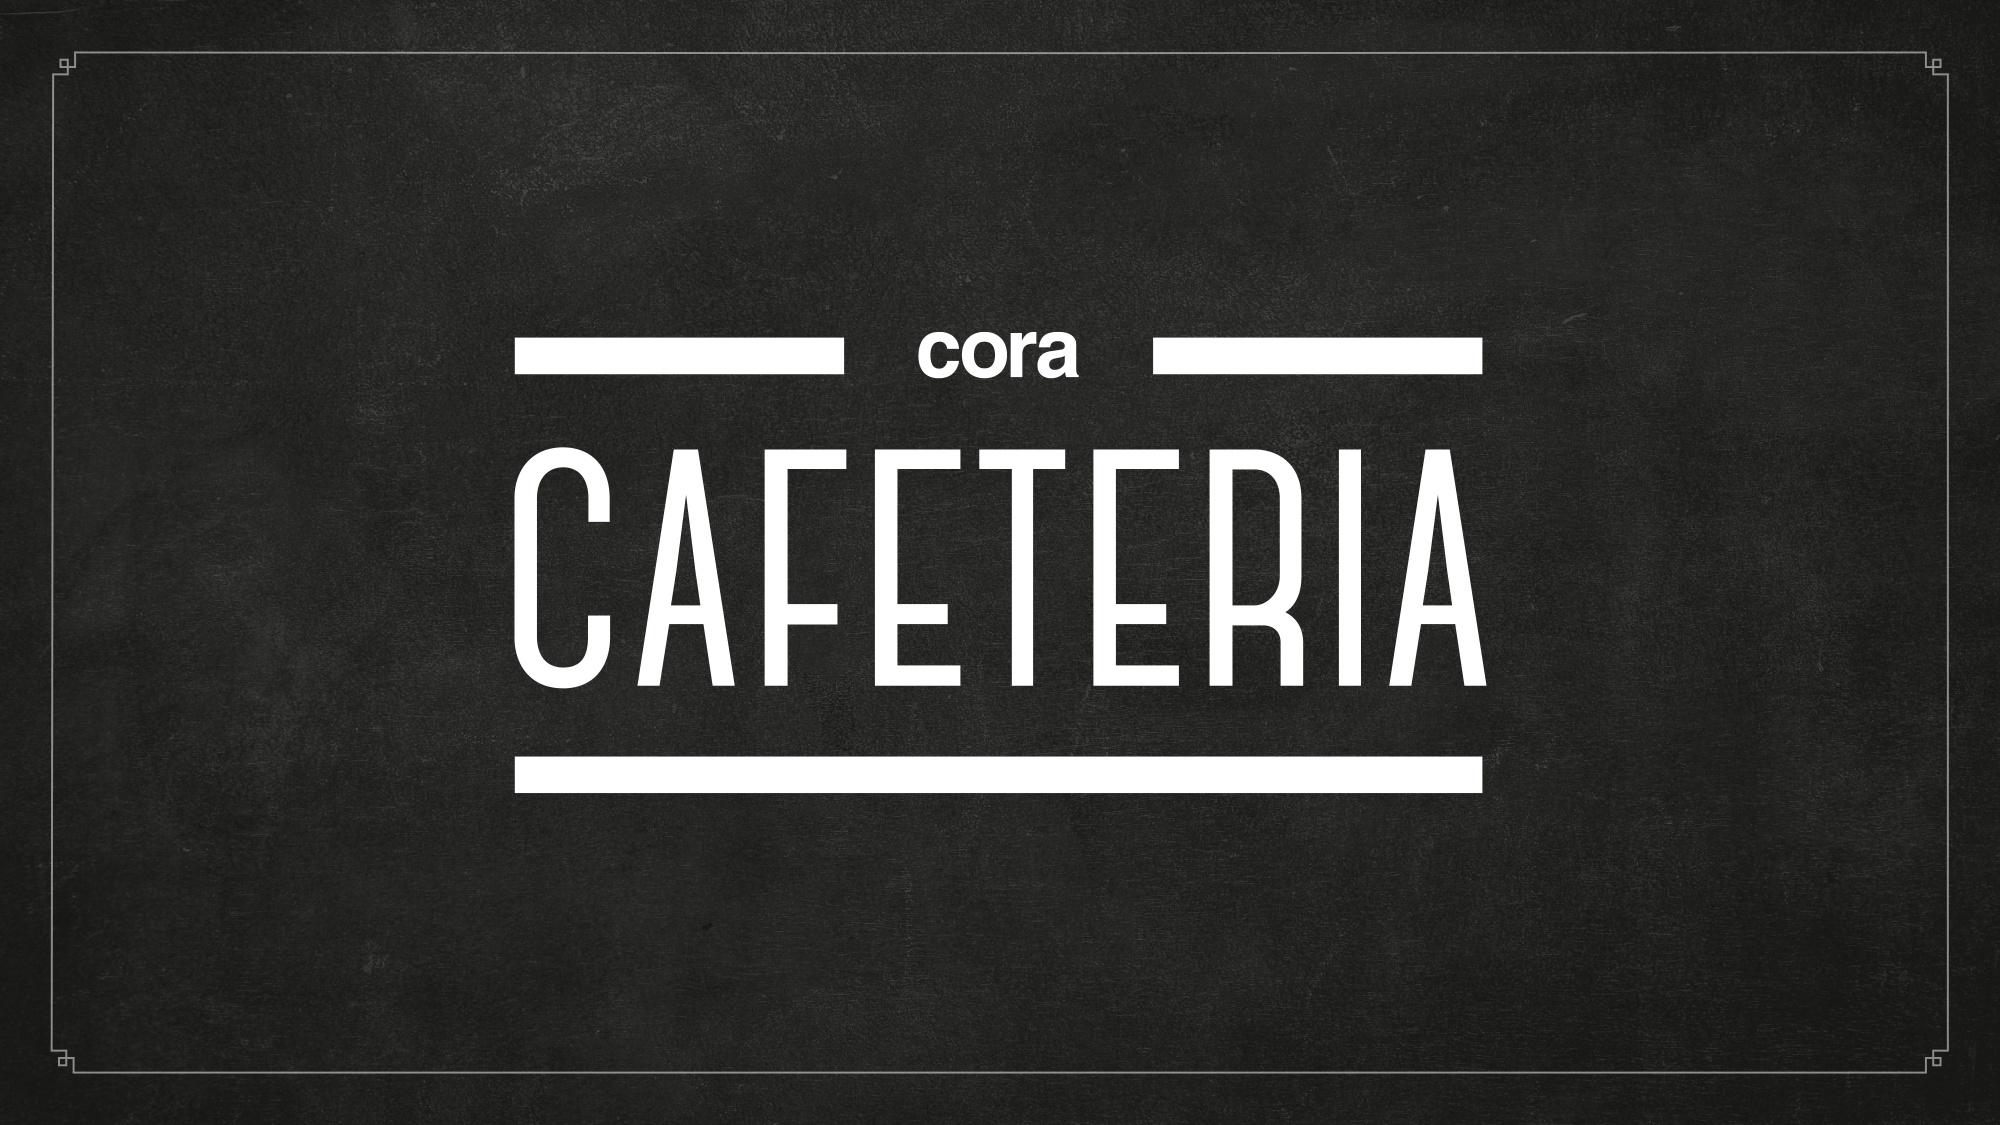 Cora Cafeteria Houssen